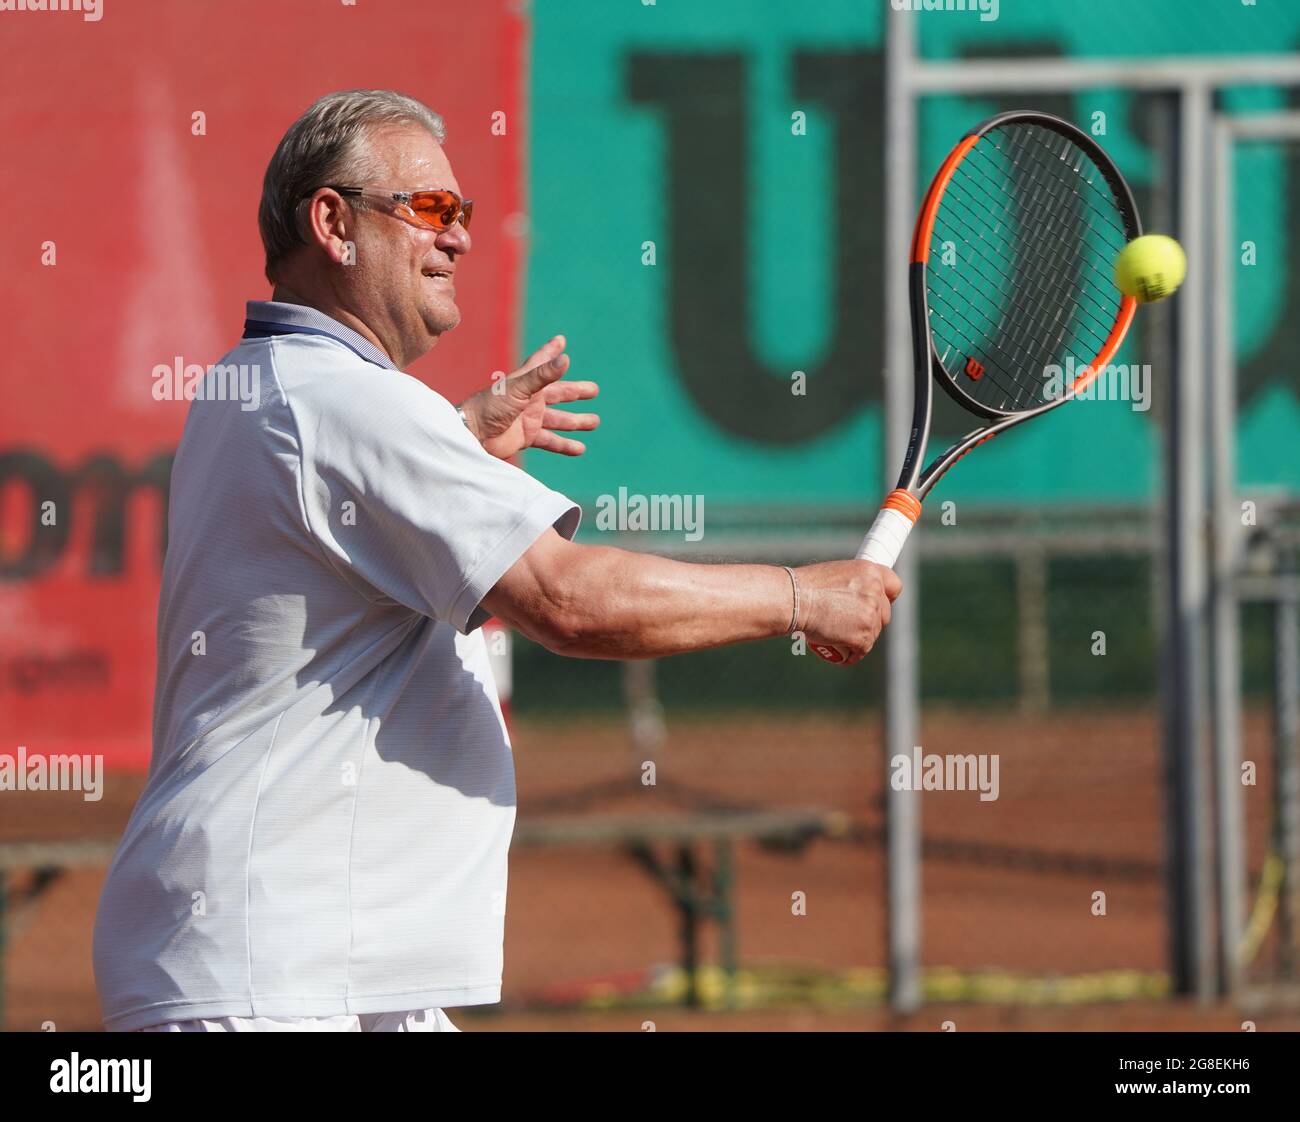 Deutscher tennis bund hi-res stock photography and images - Alamy